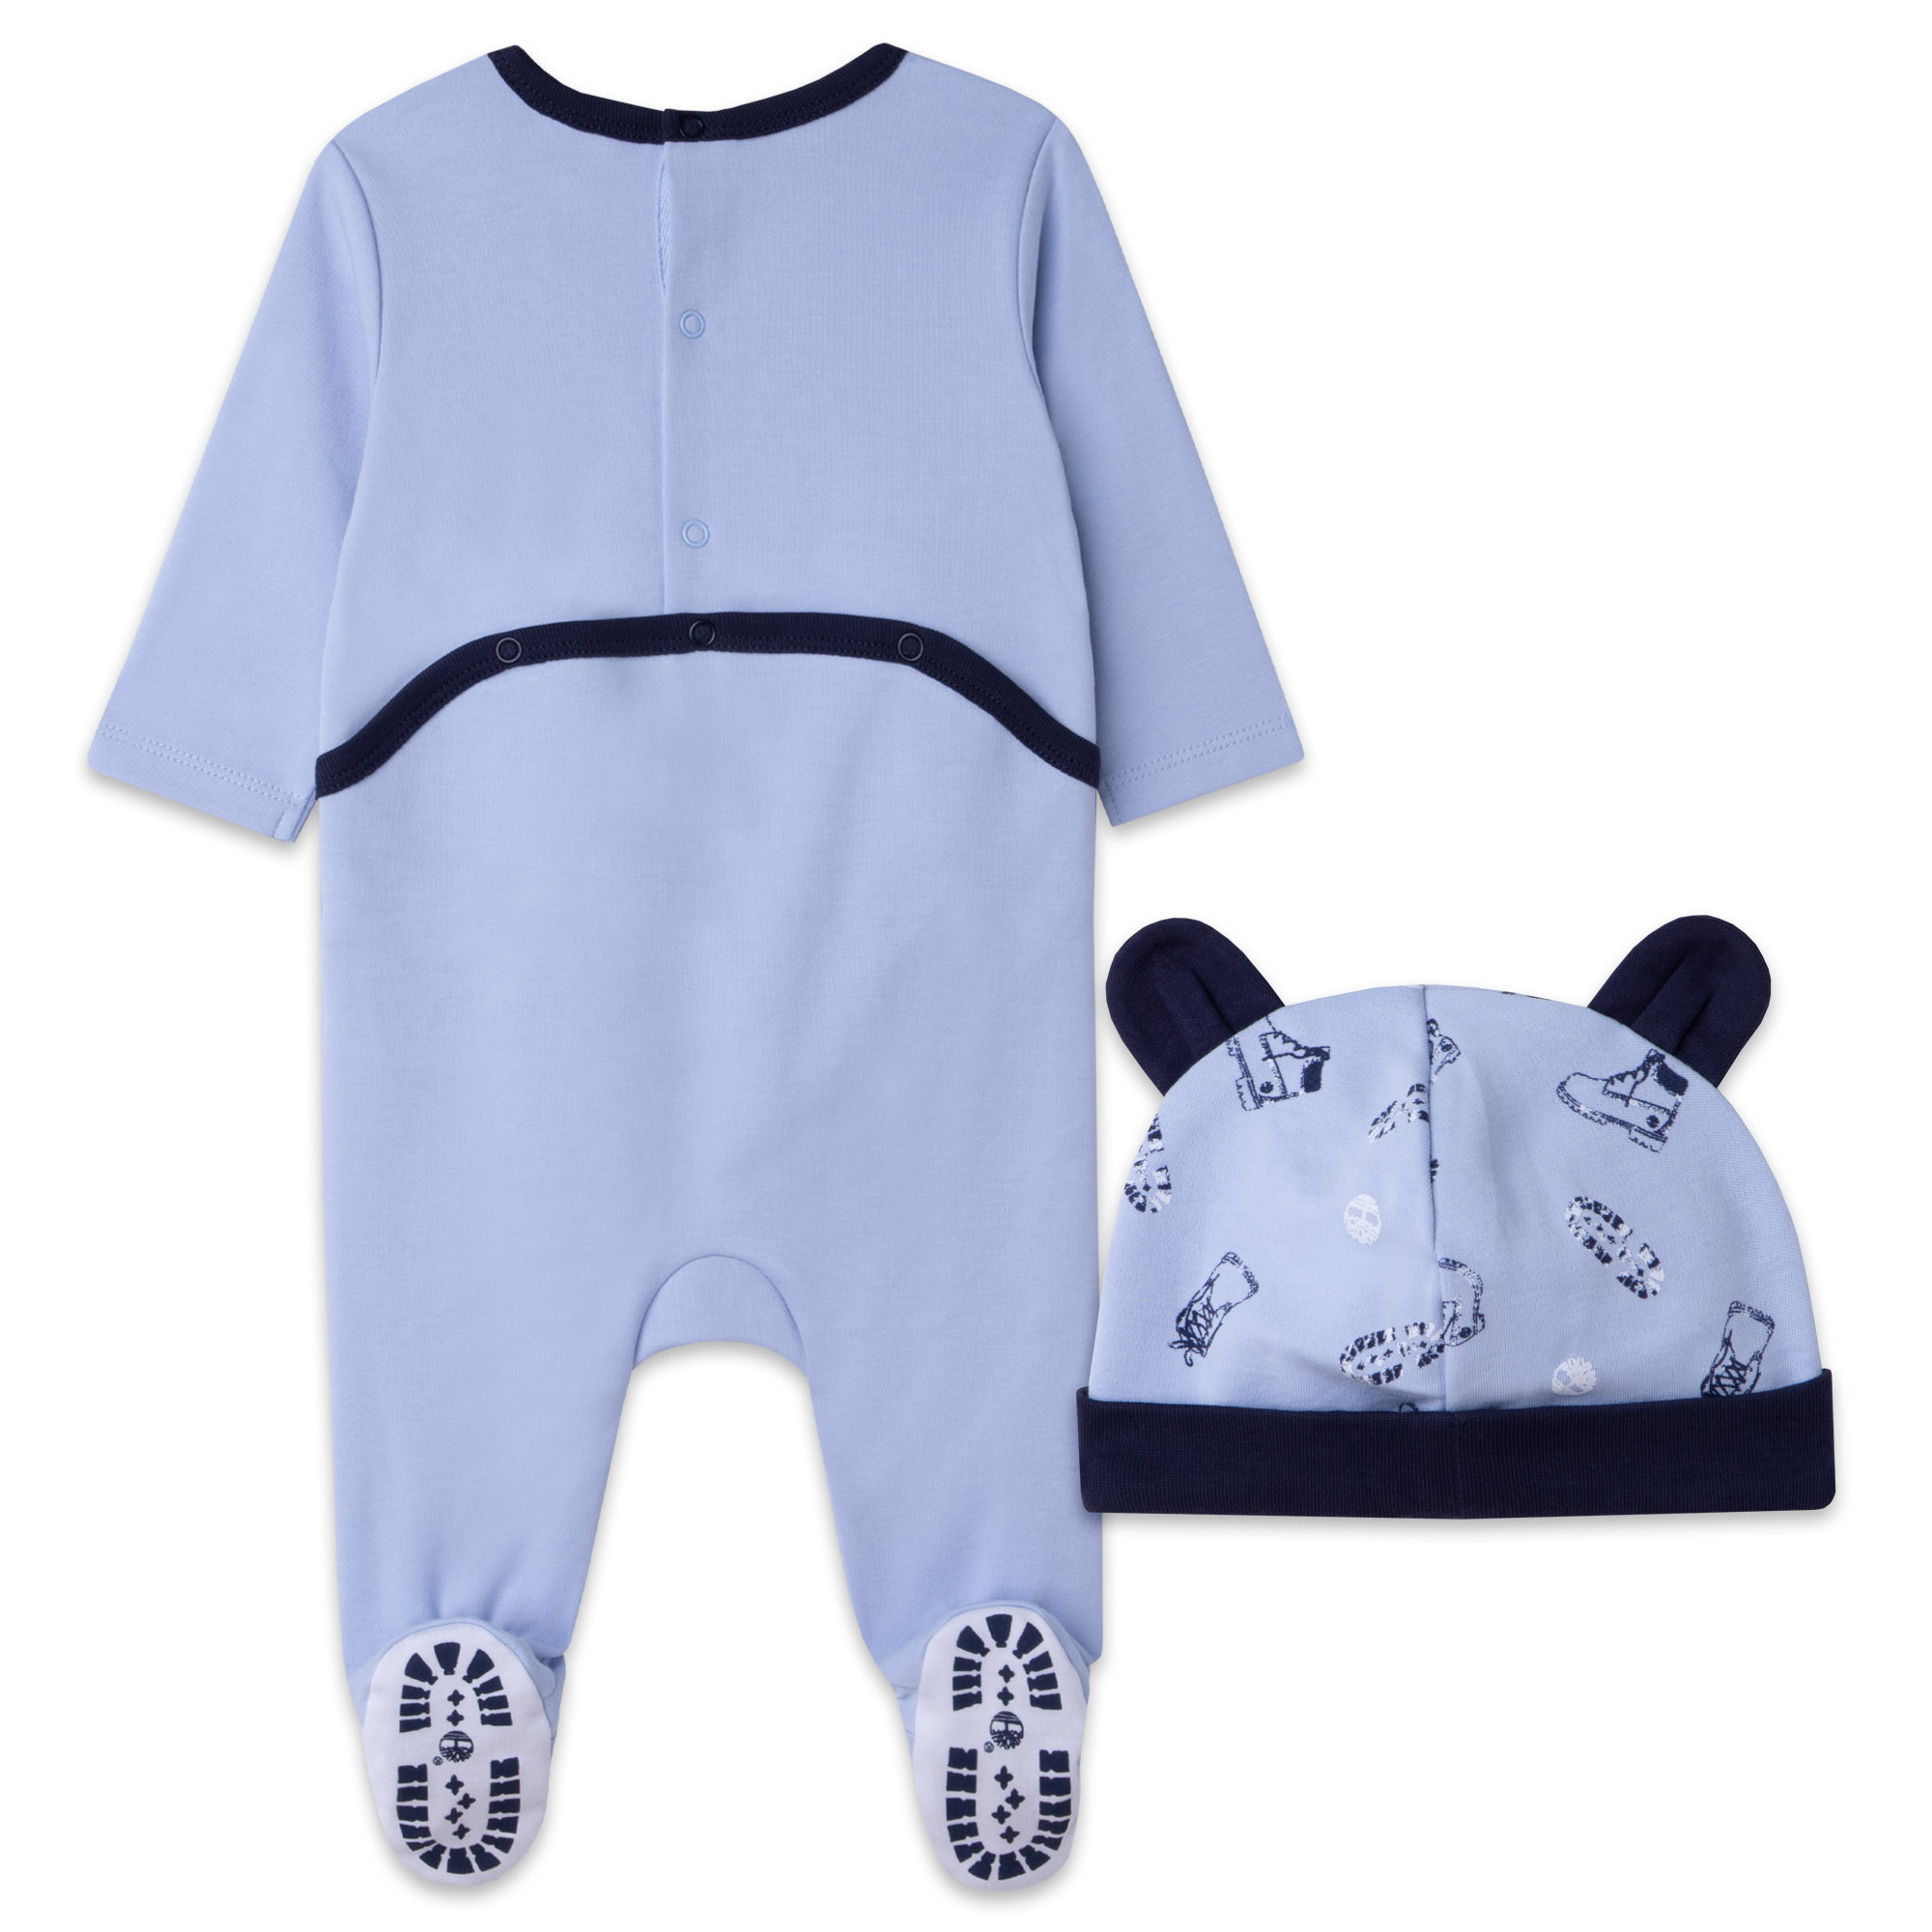 Pyjama and hat set TIMBERLAND for BOY